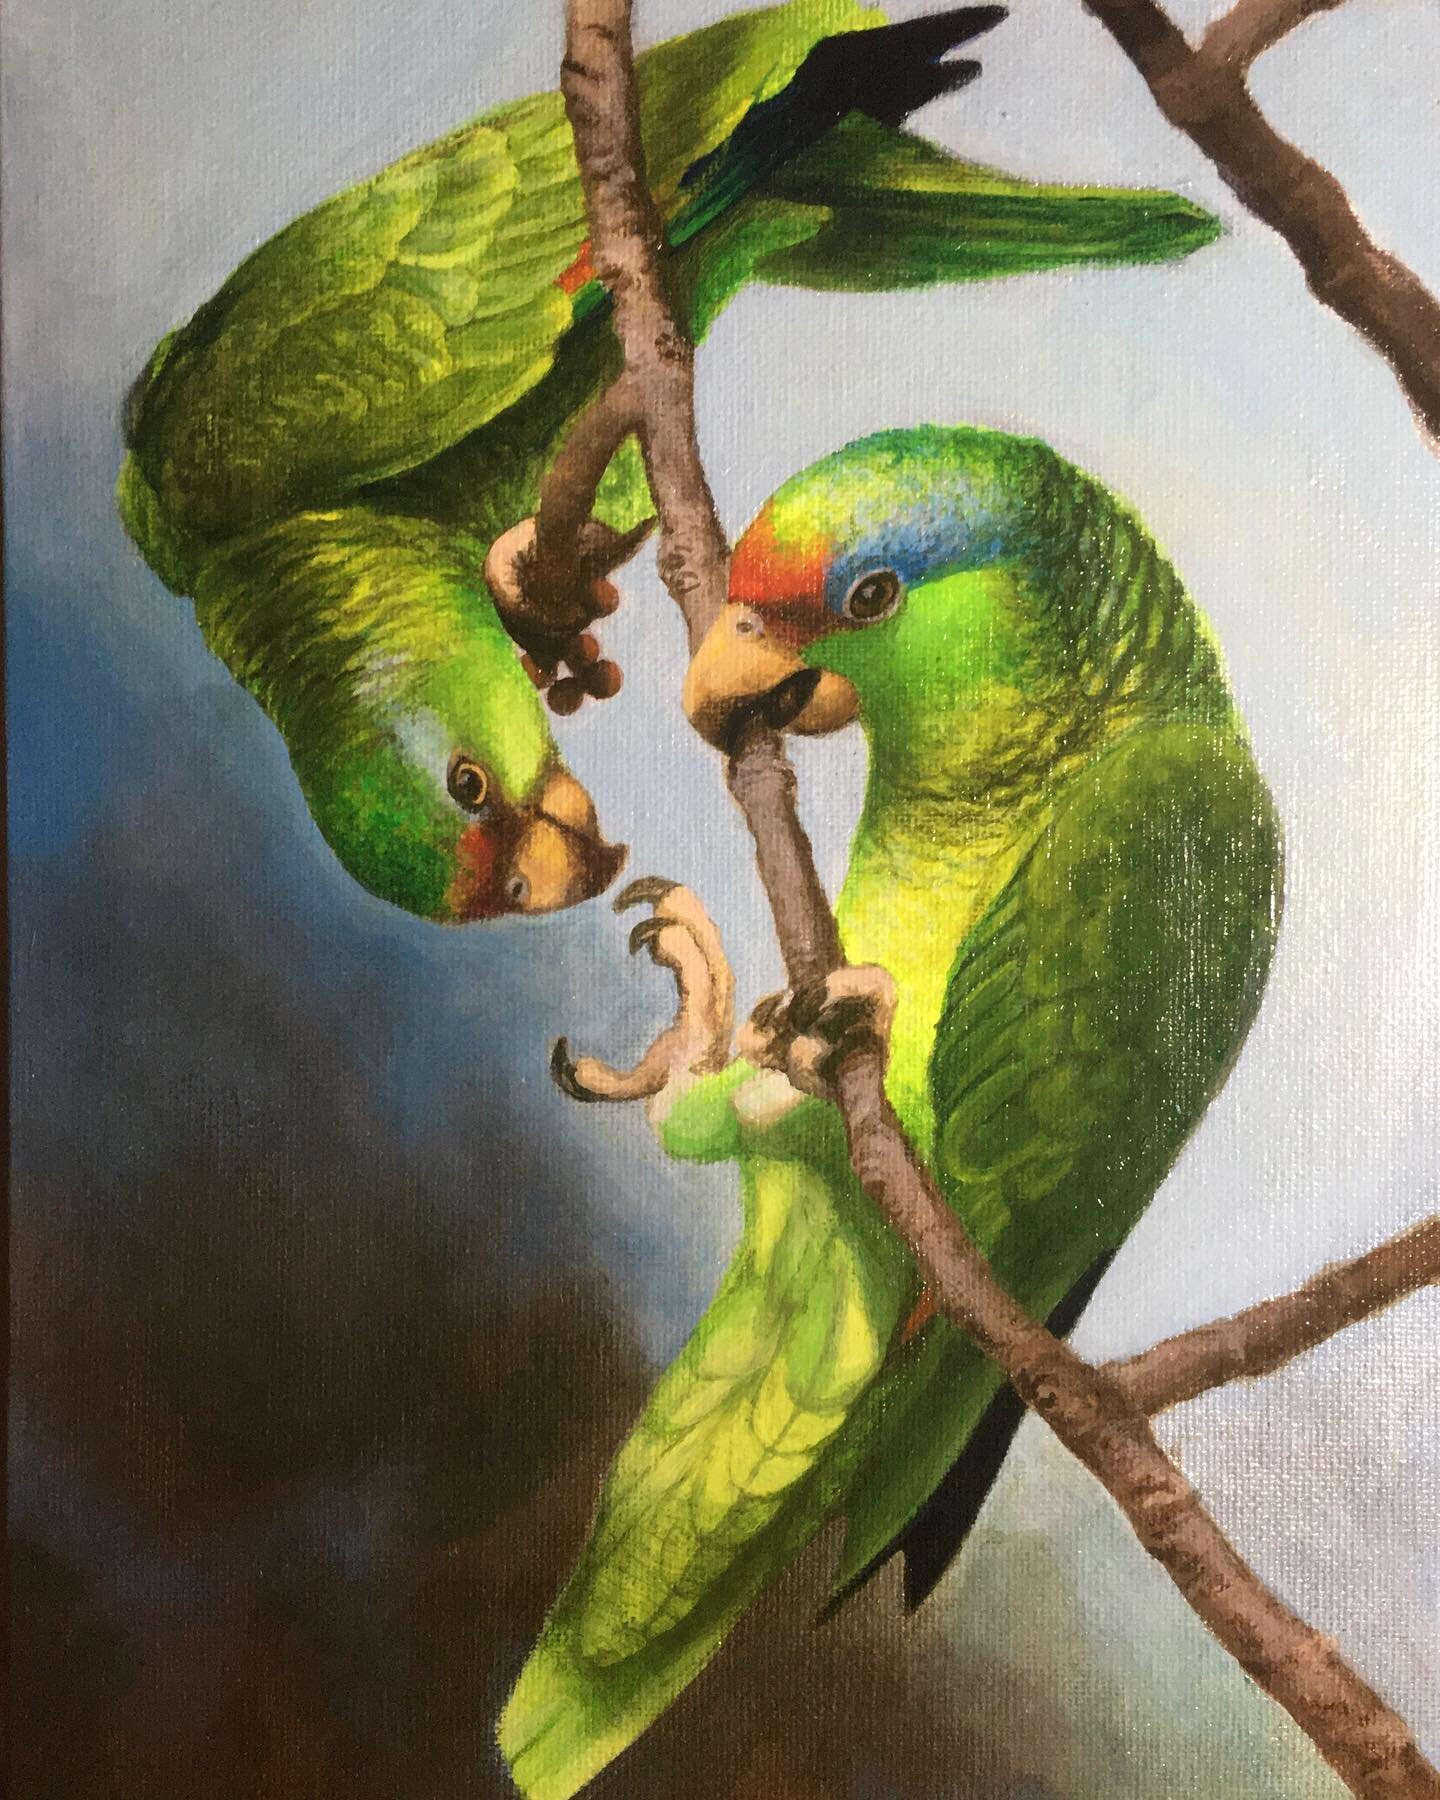 Some playful parrots I painted for someone special. #acrylic #acrylicpainting #acrylicpaintings #parrots #painting #birds #parrotlove #jeanettemadethis #jaylilliane #birding #birdsofinstagram #birdart #sandiego #sandiegoart #sandiegoartist #fineart